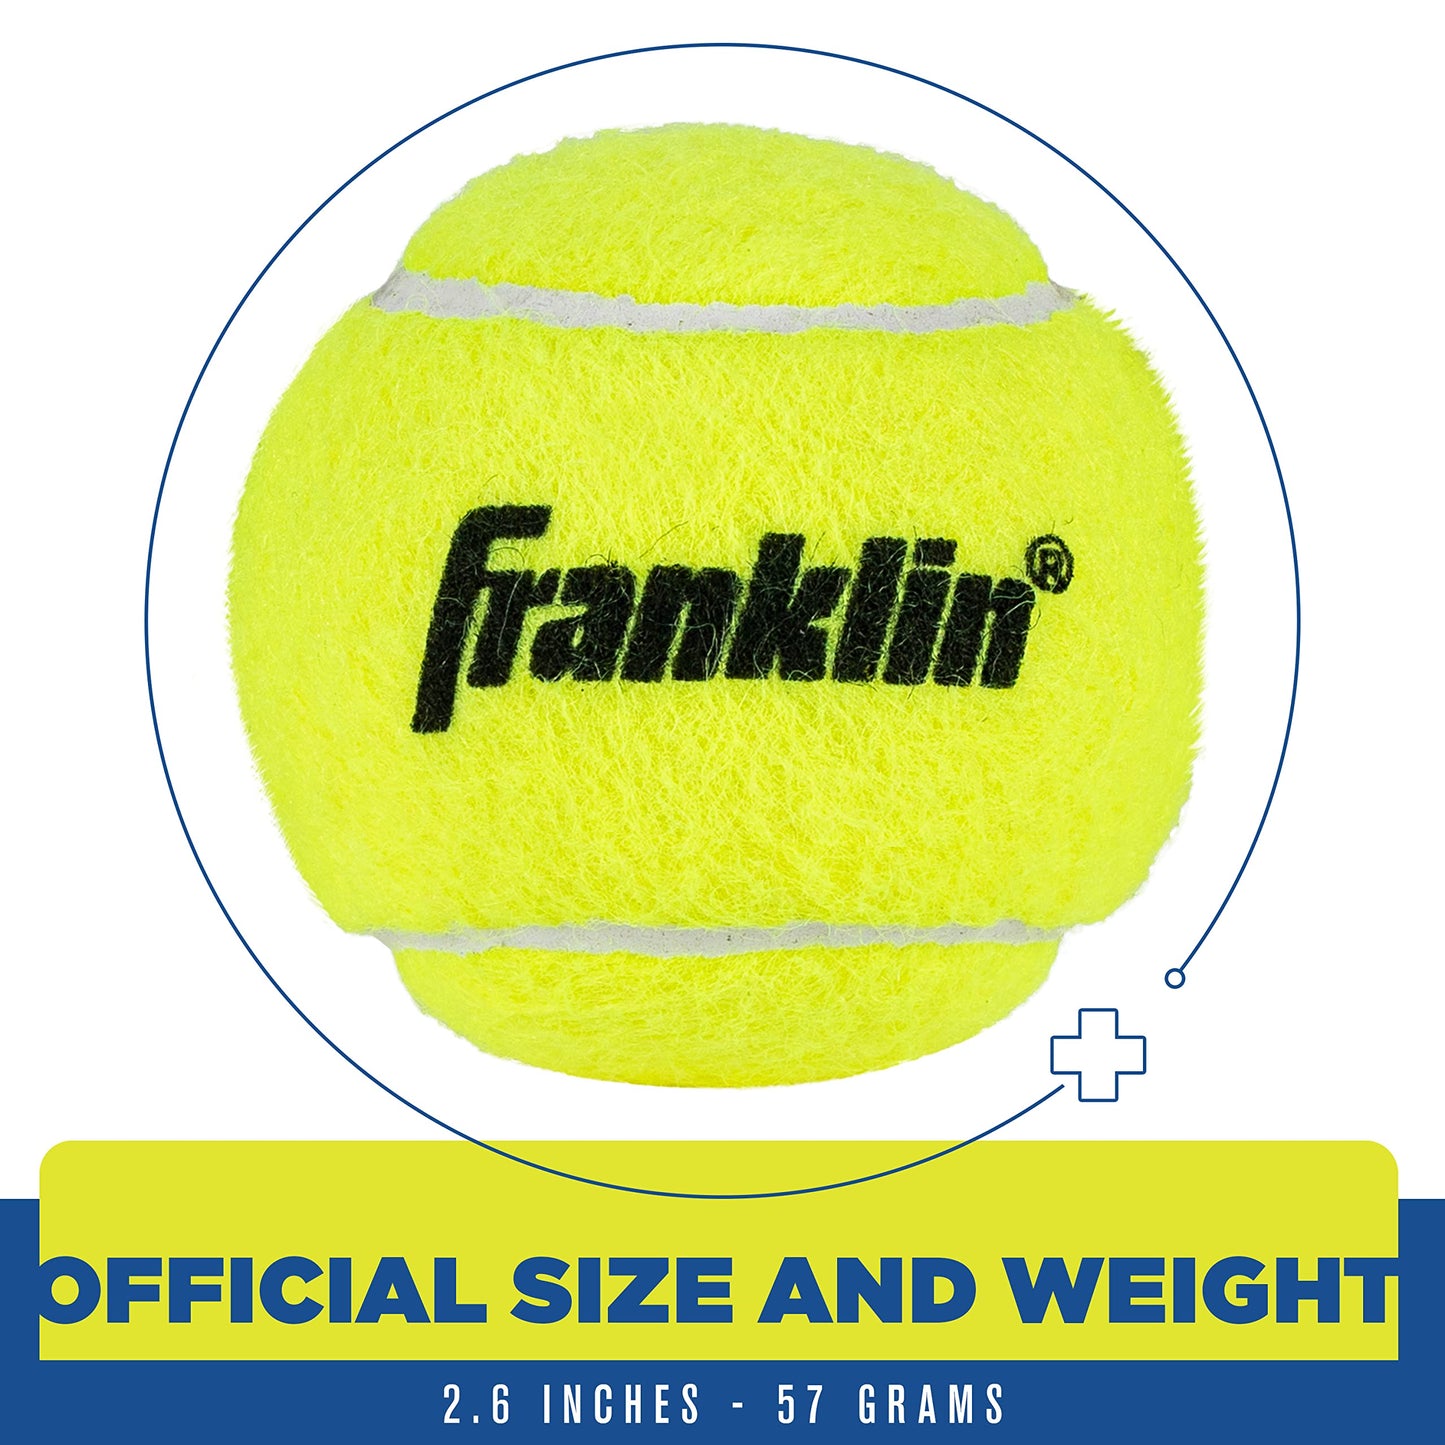 Franklin Sports Padel Paddle Tennis Balls - PRO+ Padel Balls - 3 Pack Can of Paddle Tennis Balls - Official Padel Balls - Durable Premium Performance